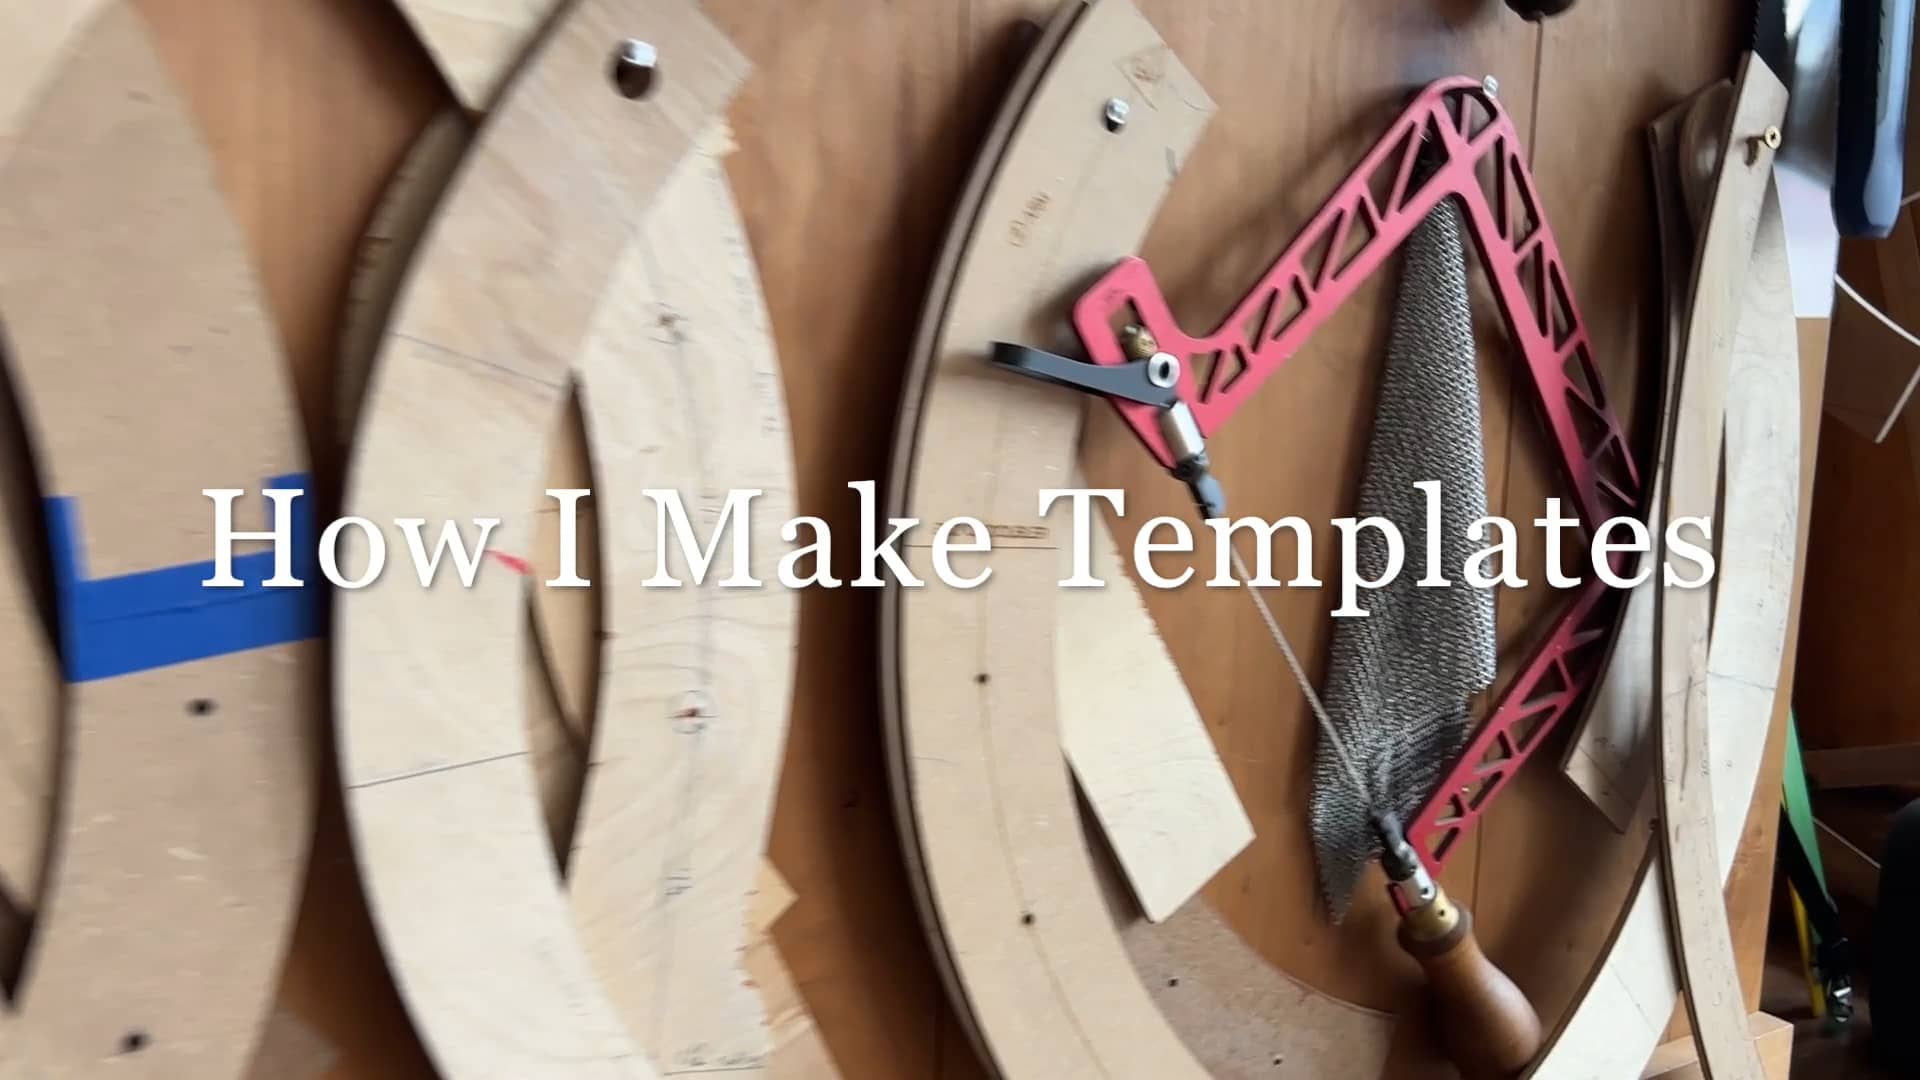 Make Templates mp4 on Vimeo